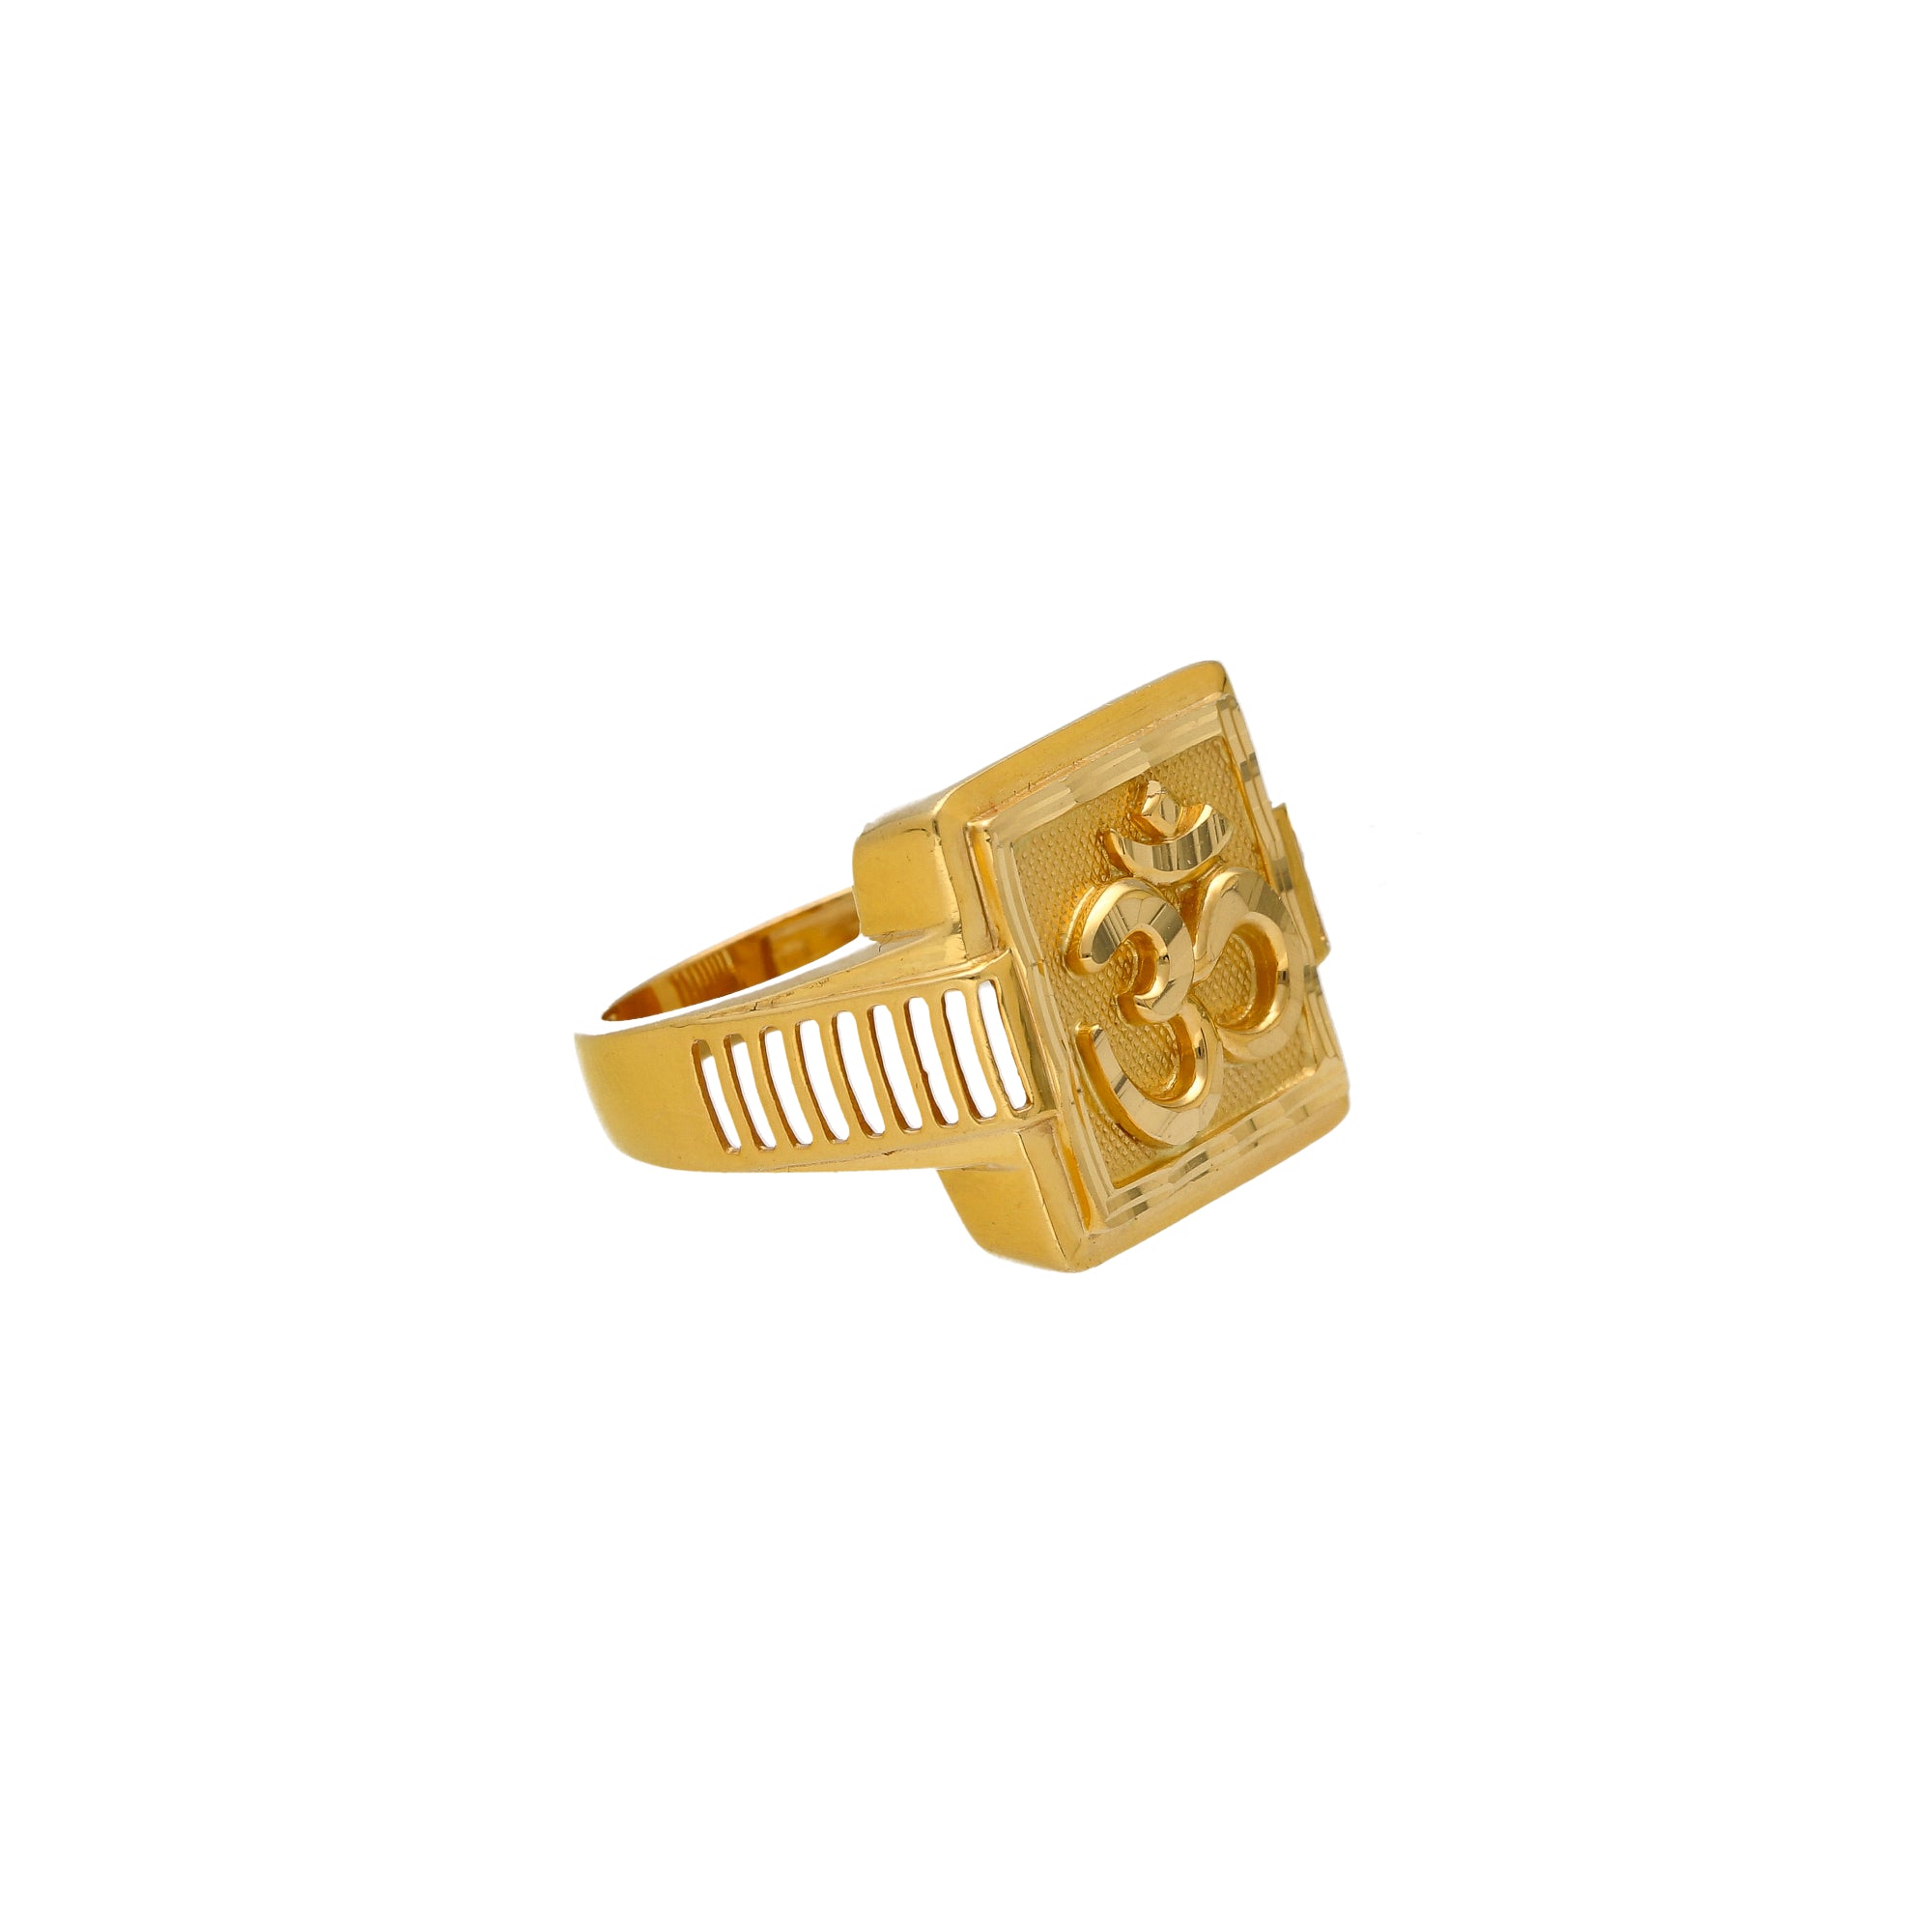 Buy quality Gold Om Damru Gents Ring in Ahmedabad